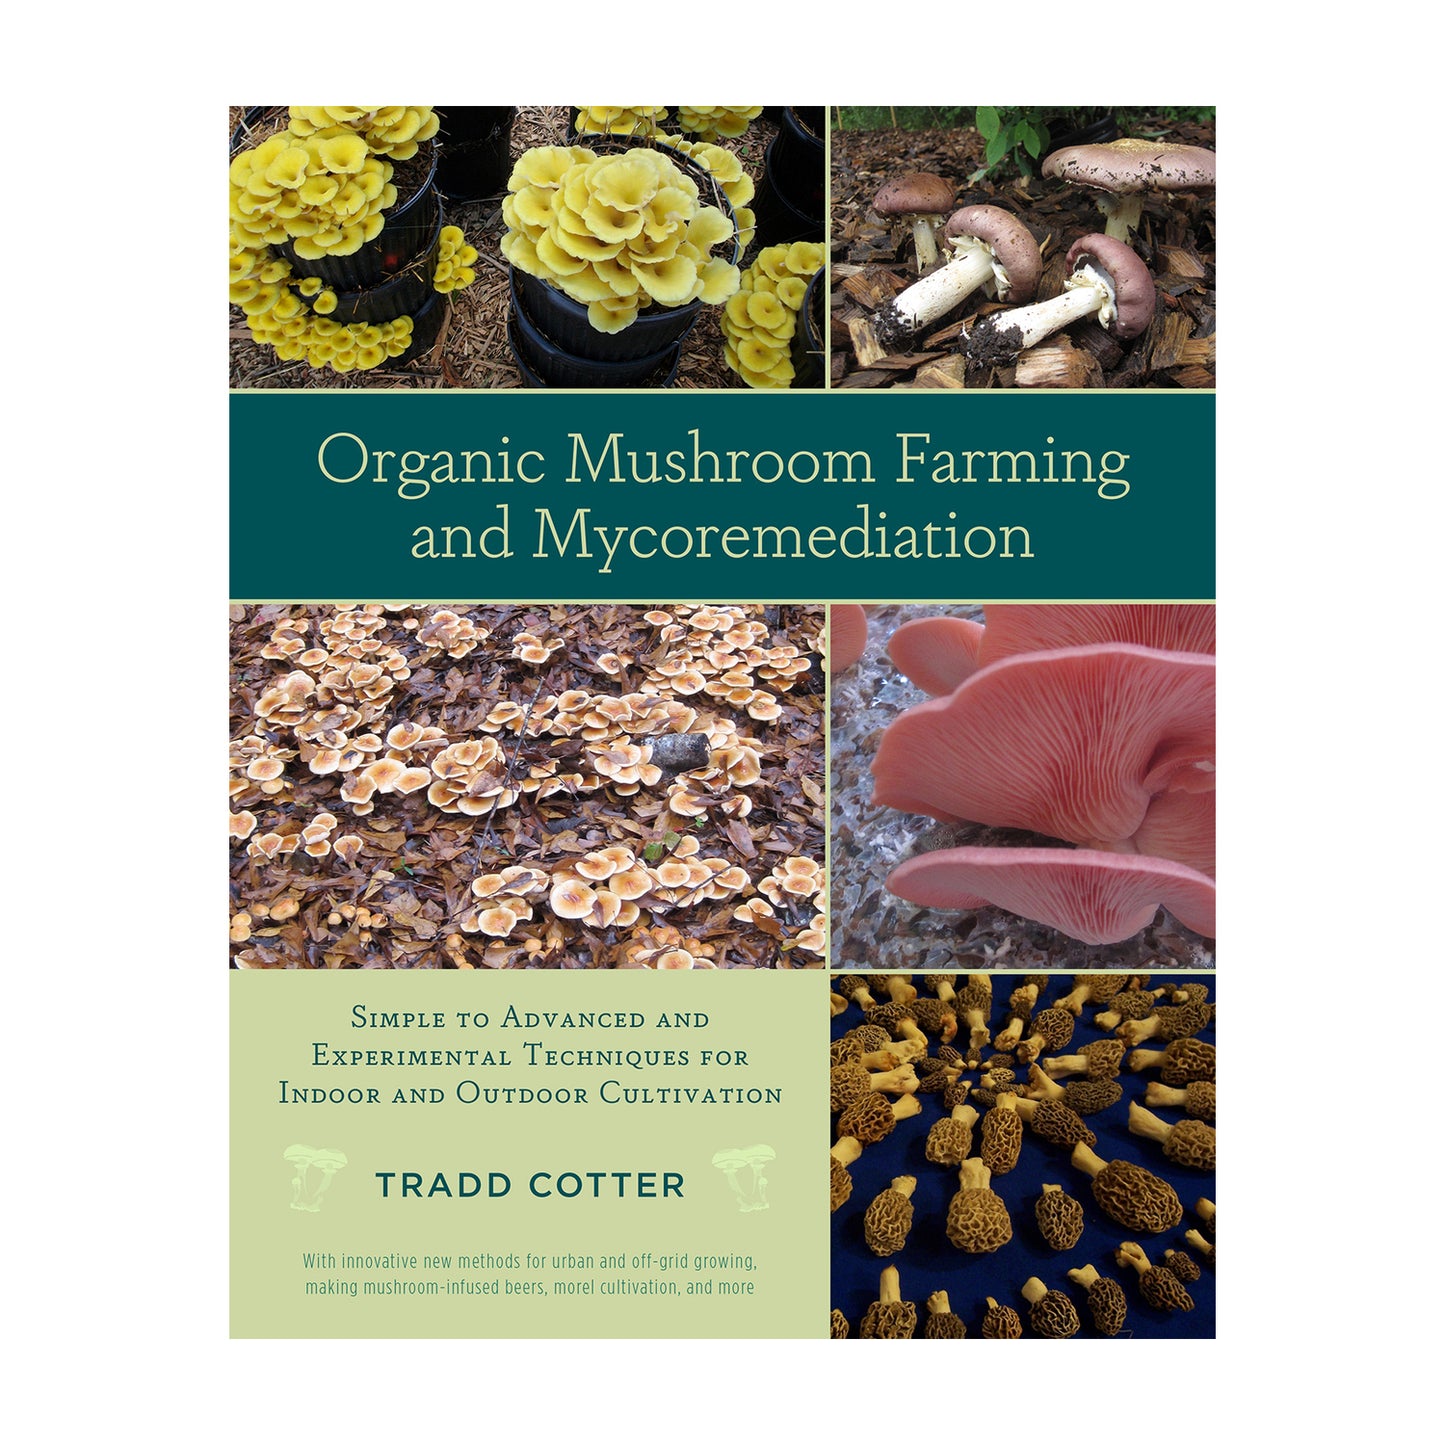 Organic Mushroom Farming and Mycoremdiation by Tradd Cotter